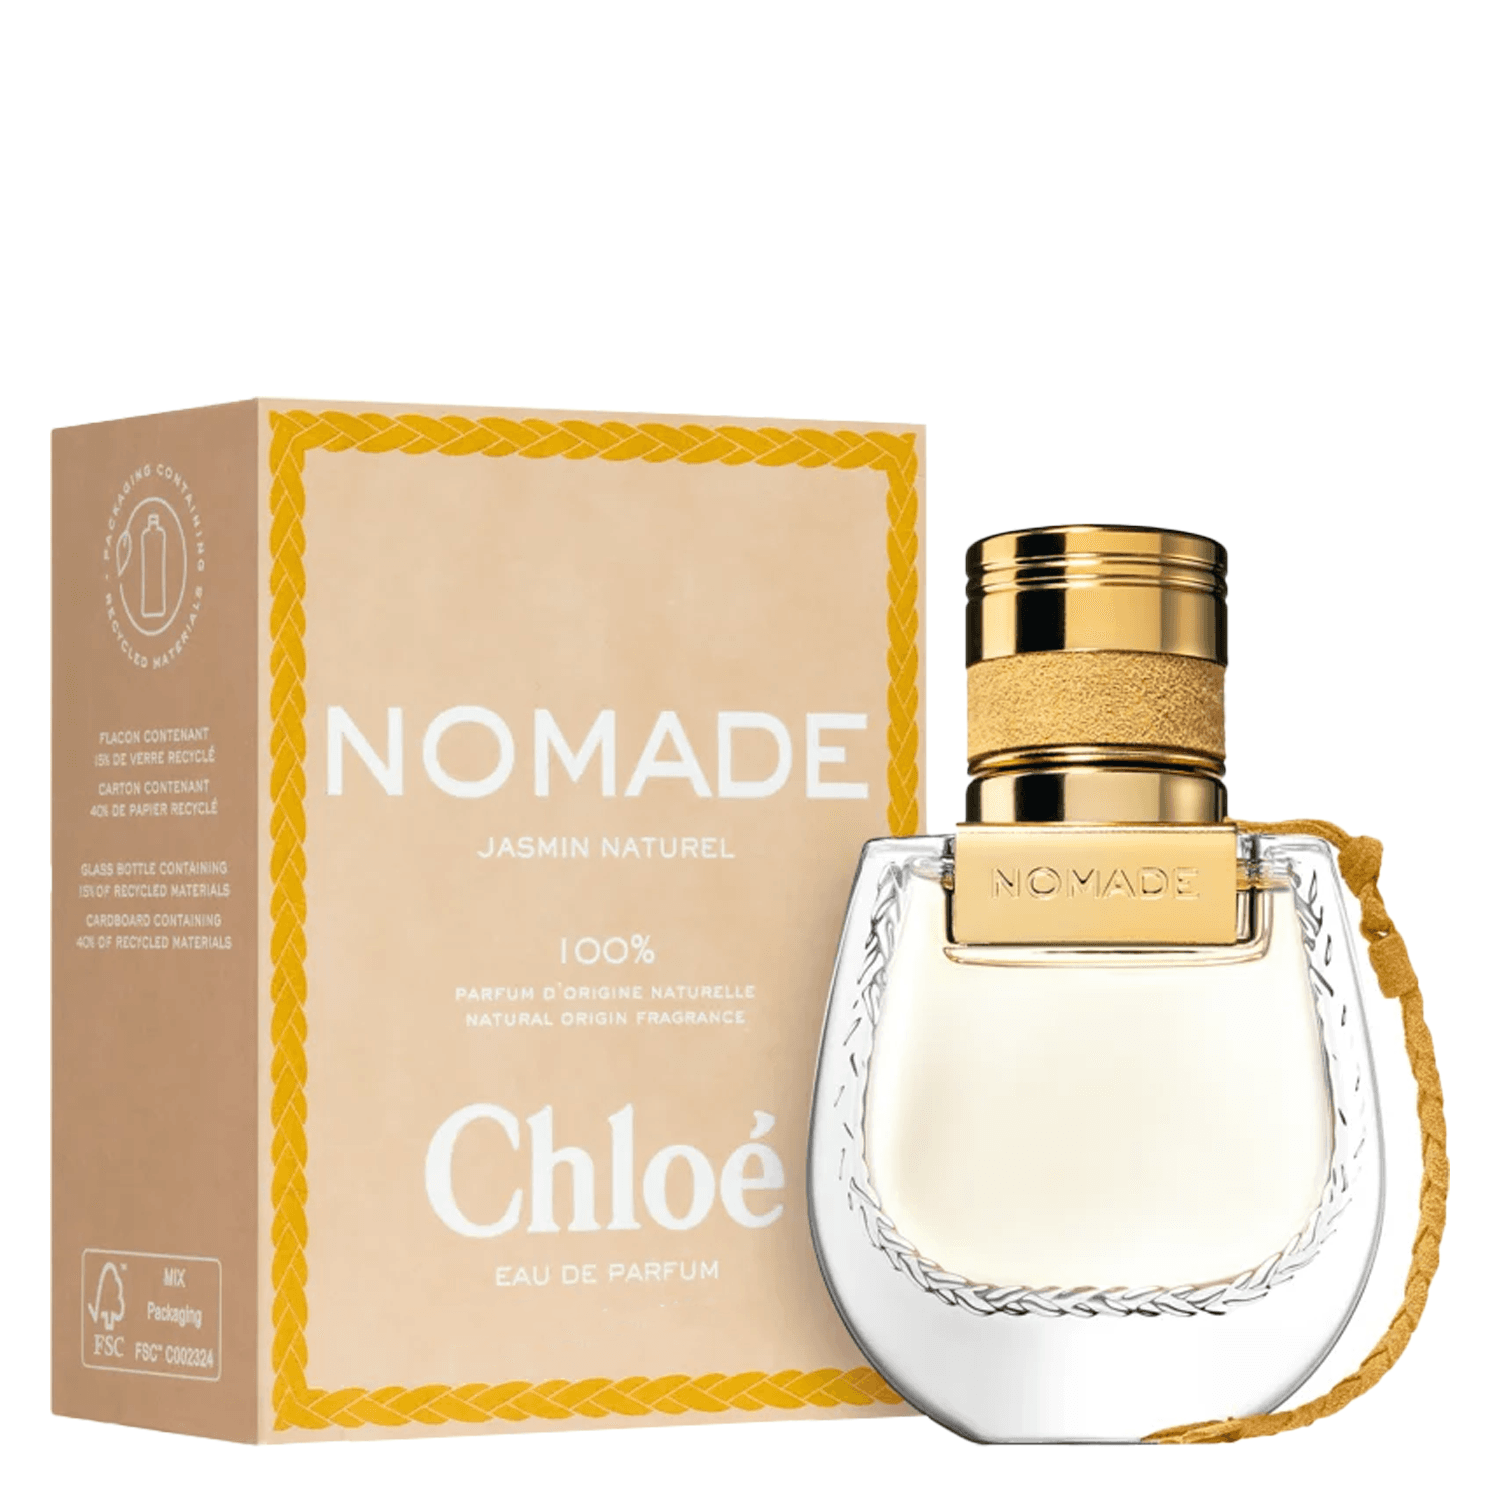 Chloé Nomade - Jasmin Naturel Eau de Parfum